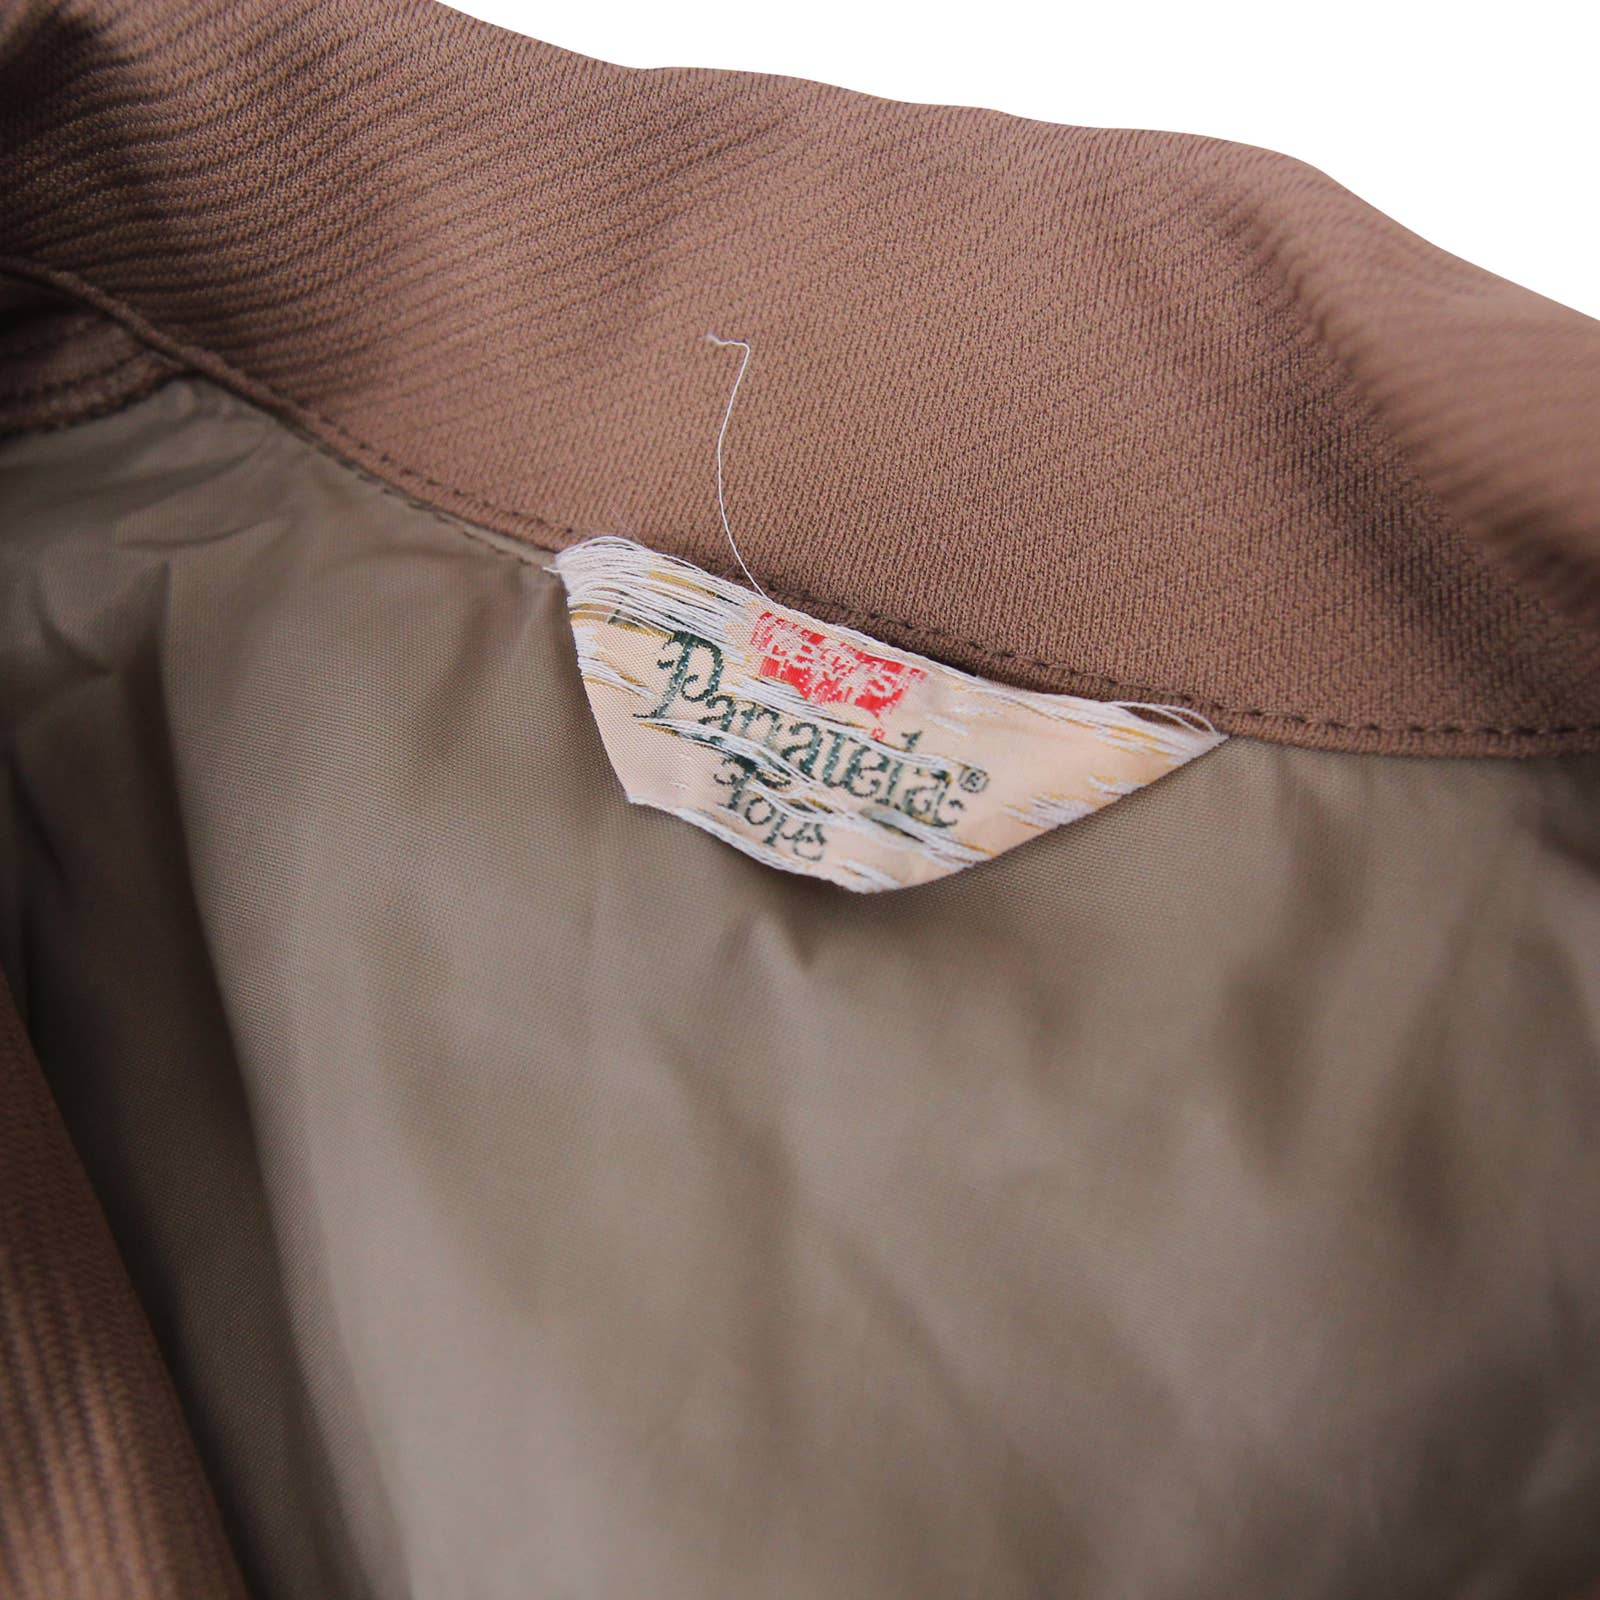 Vintage Levis Panatela Peal Snapdown Shirt Jacket - L – Jak of all Vintage